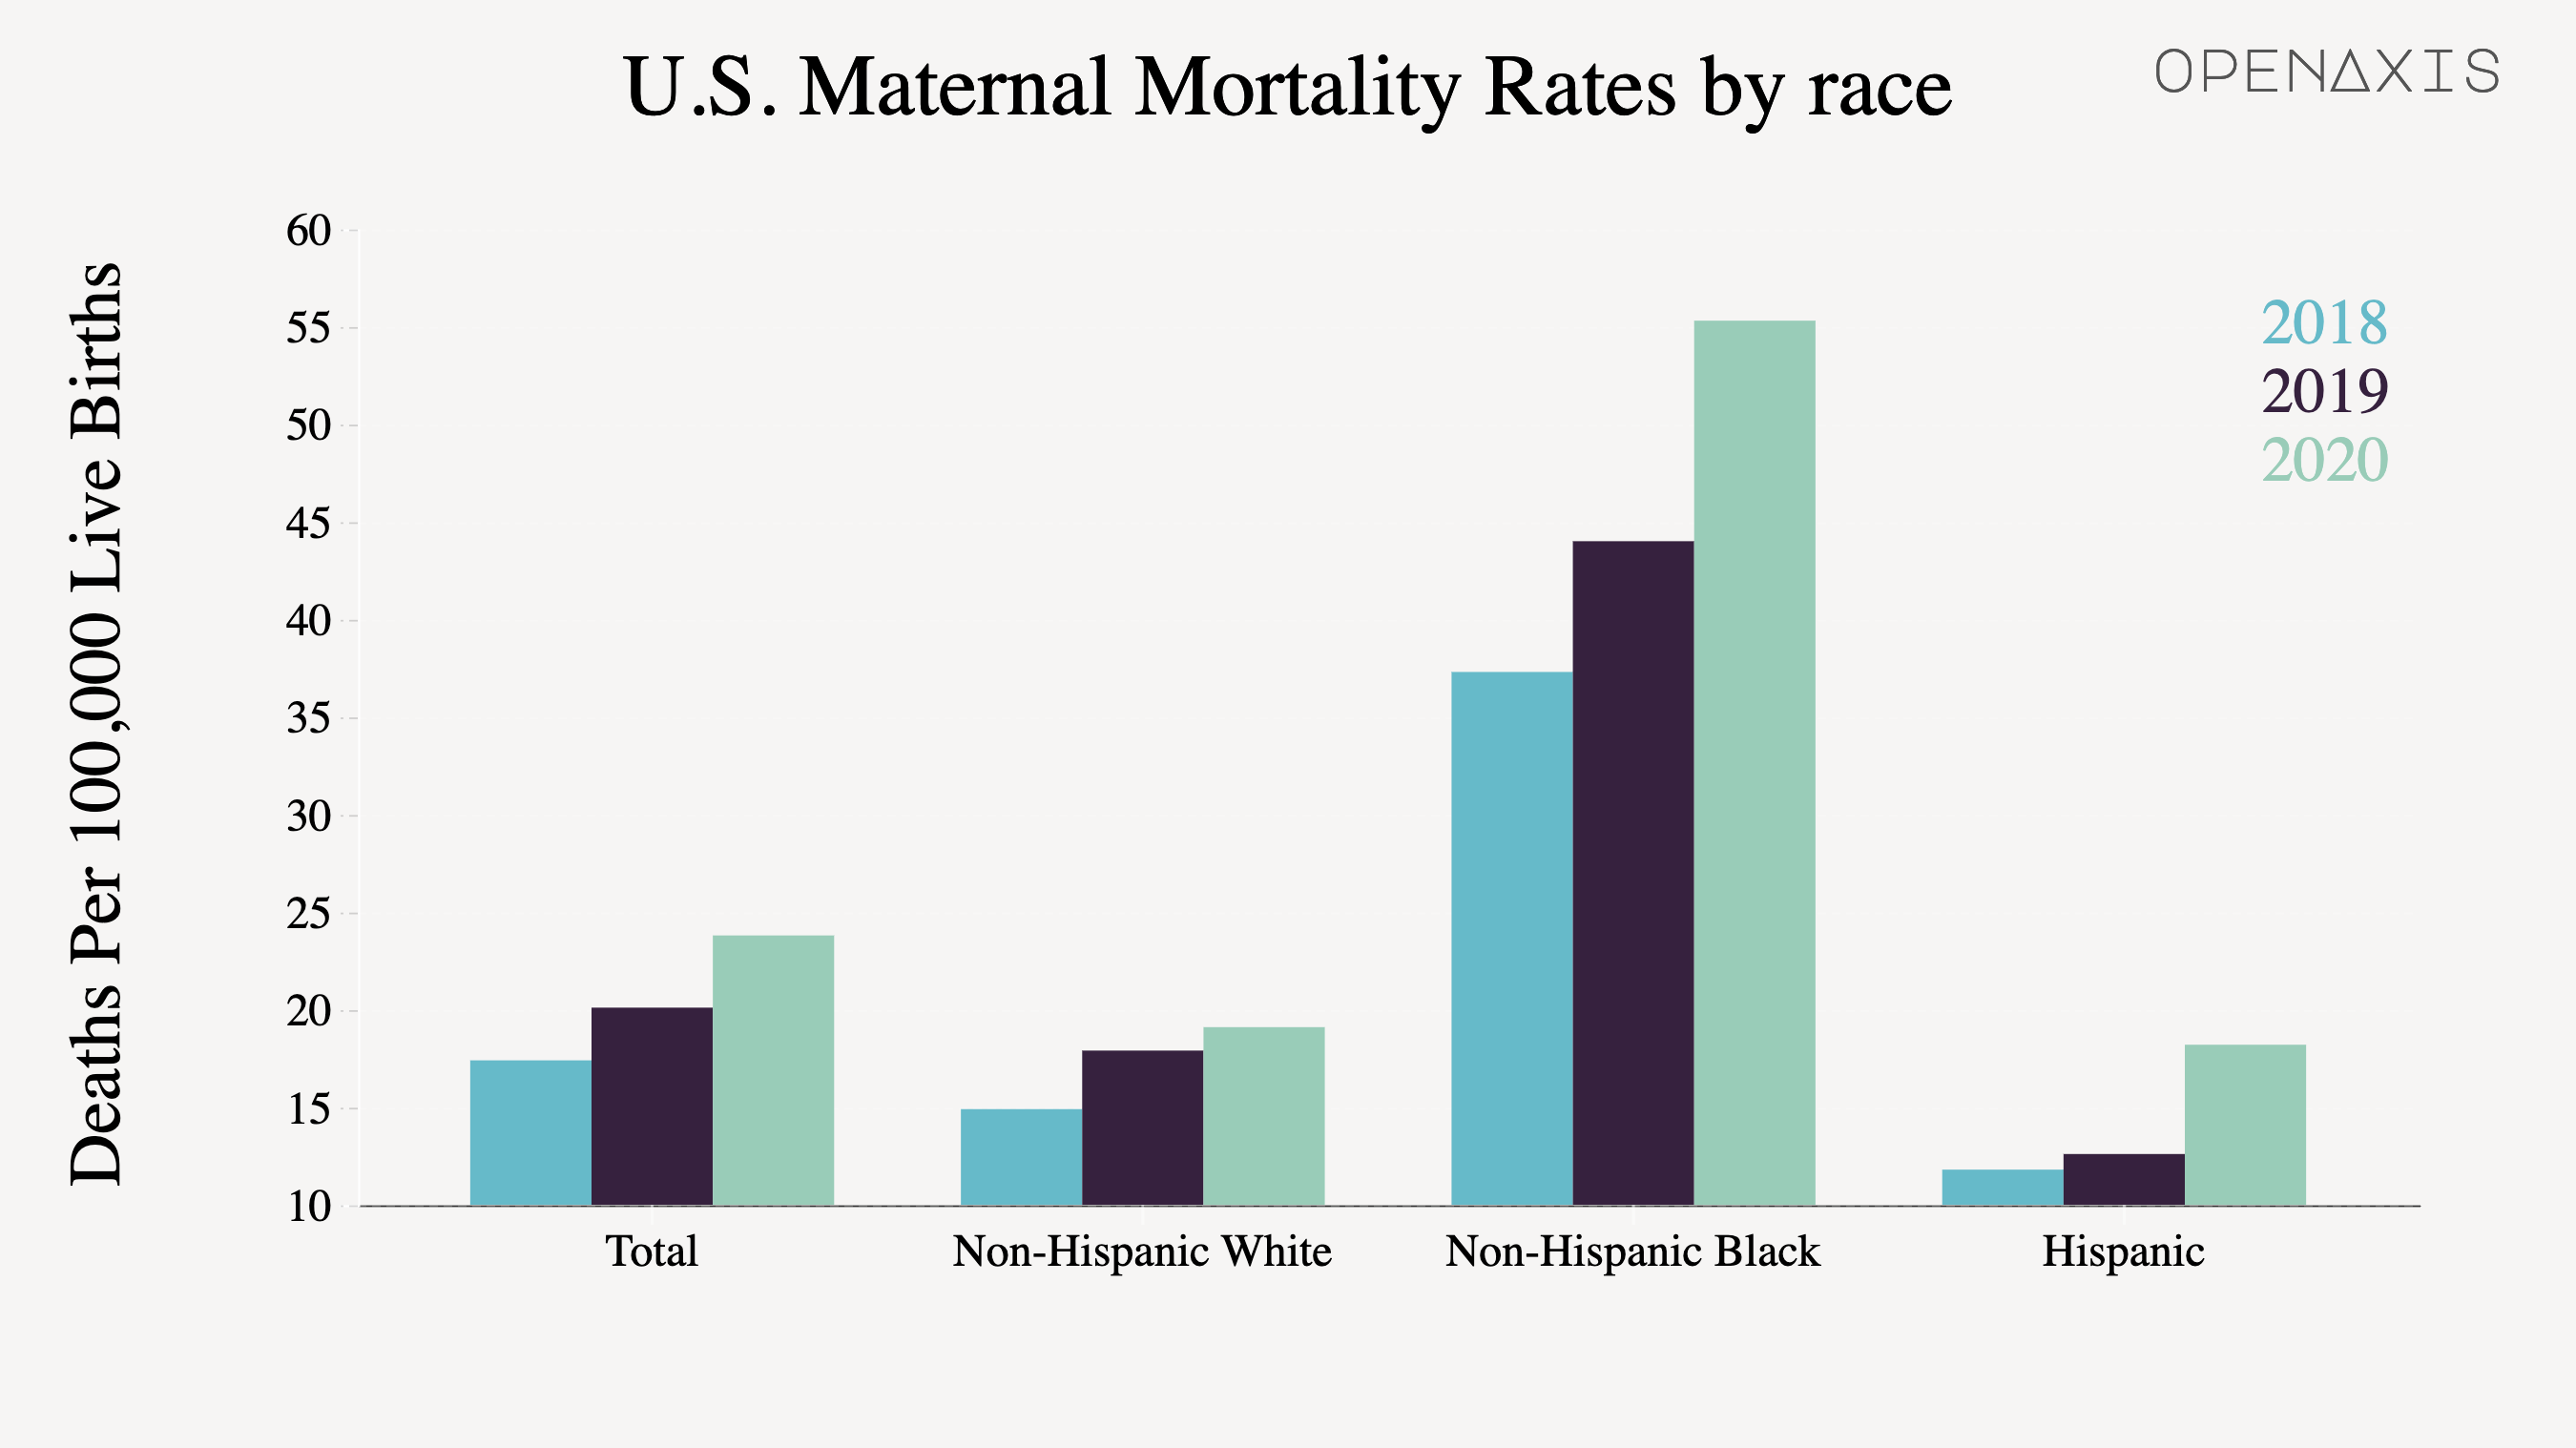 "U.S. Maternal Mortality Rates by race "